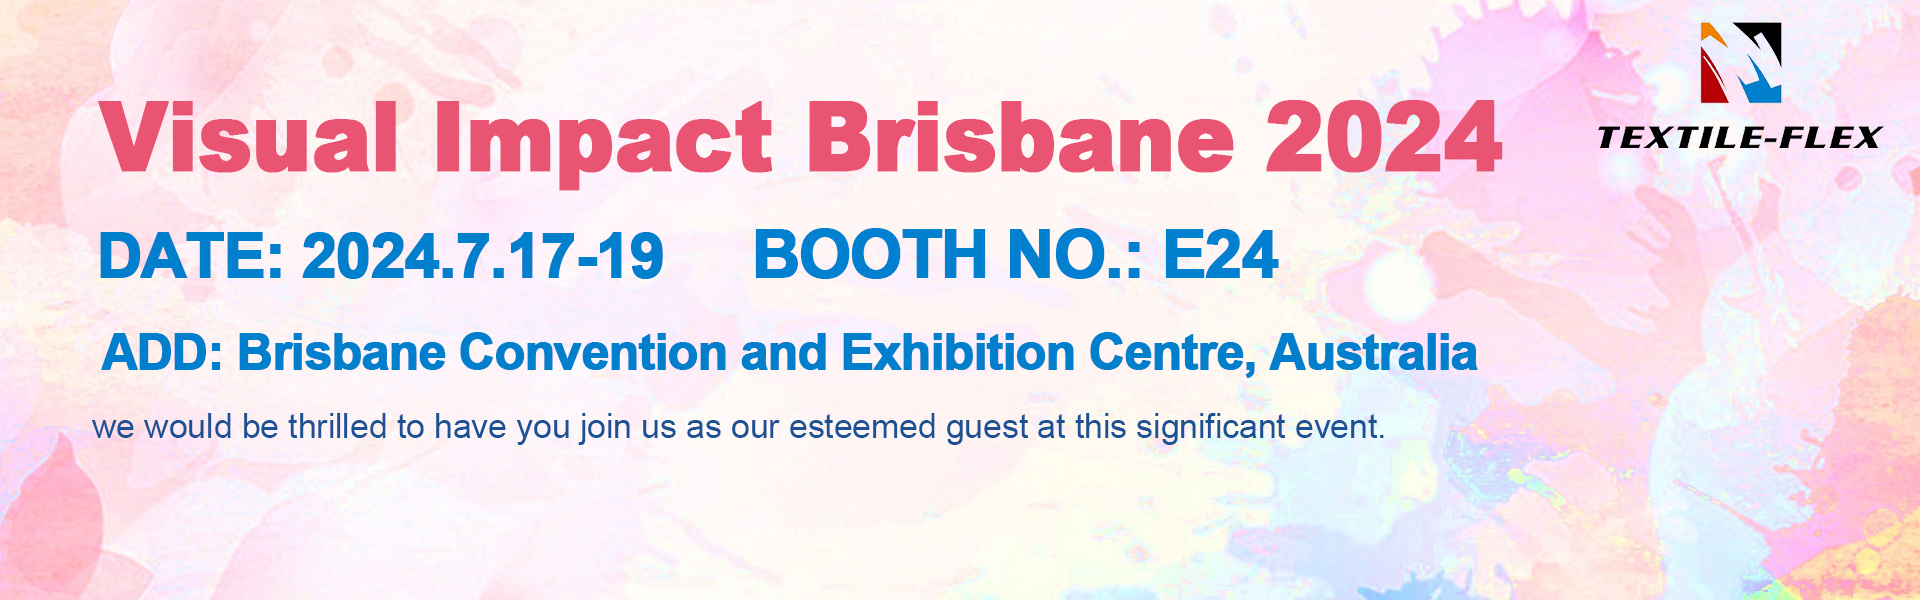 Visual Impact Brisbane 2024